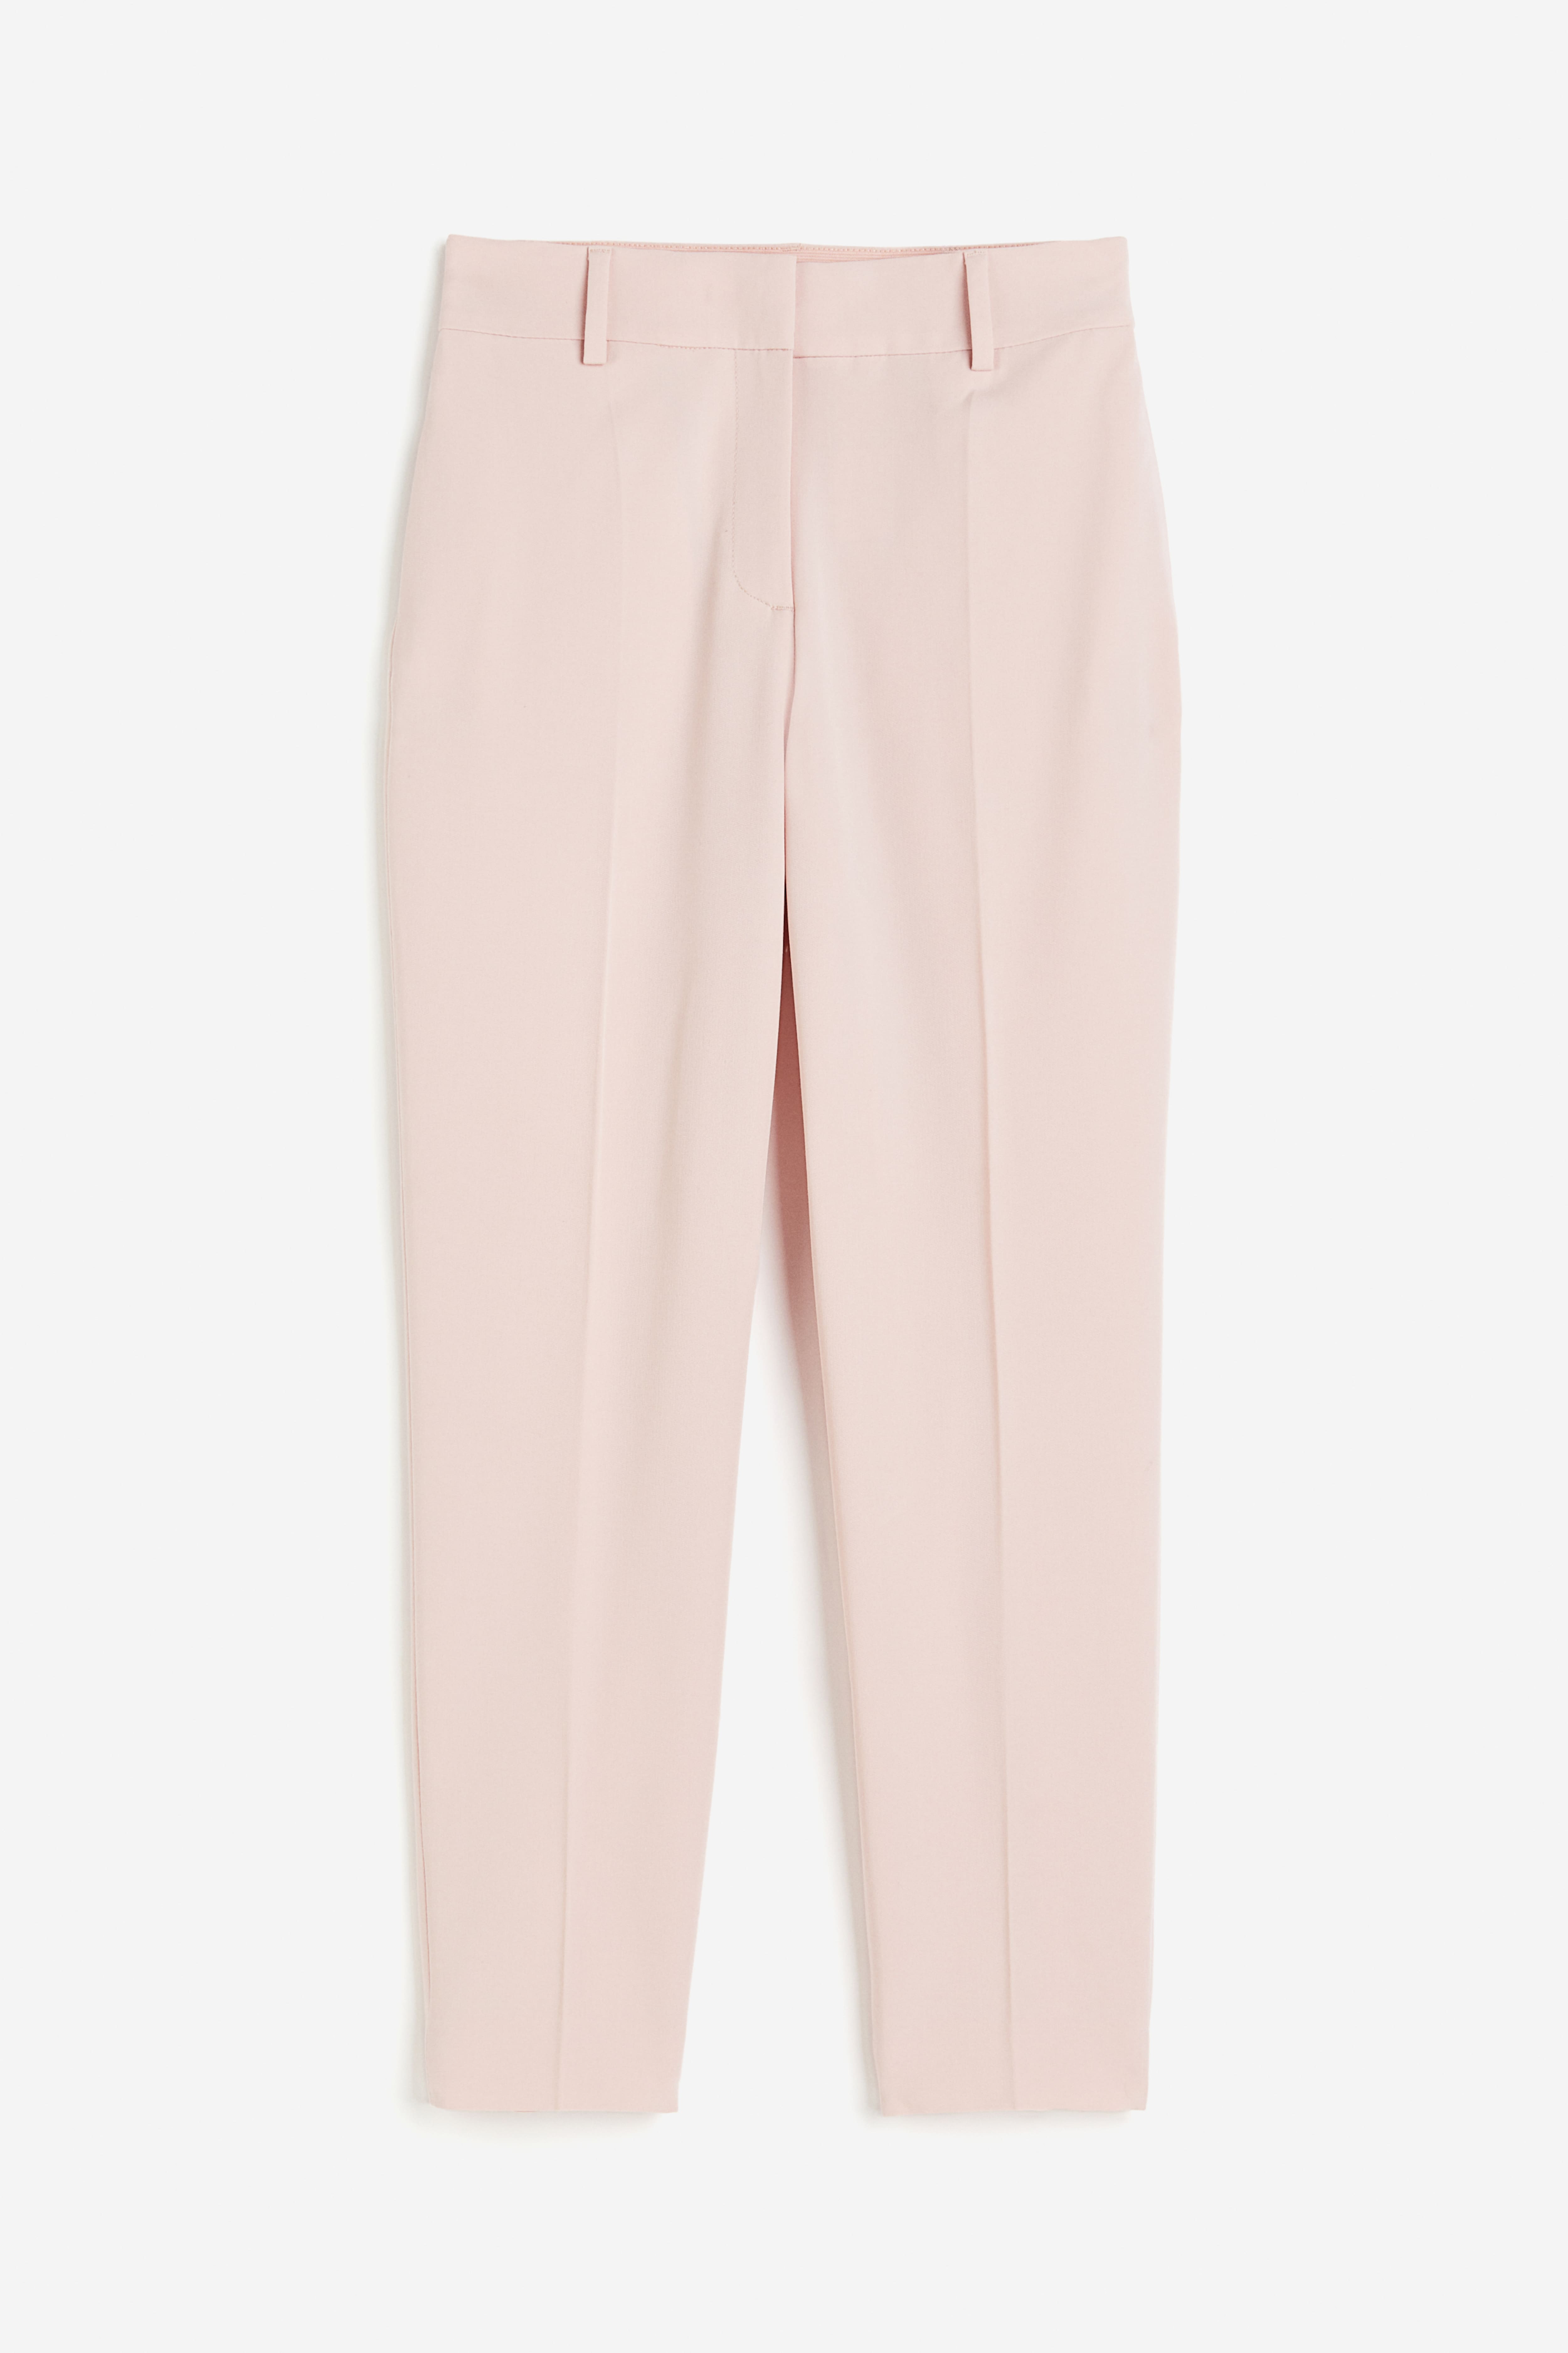 Women's Pink Trousers & Leggings | Very.co.uk